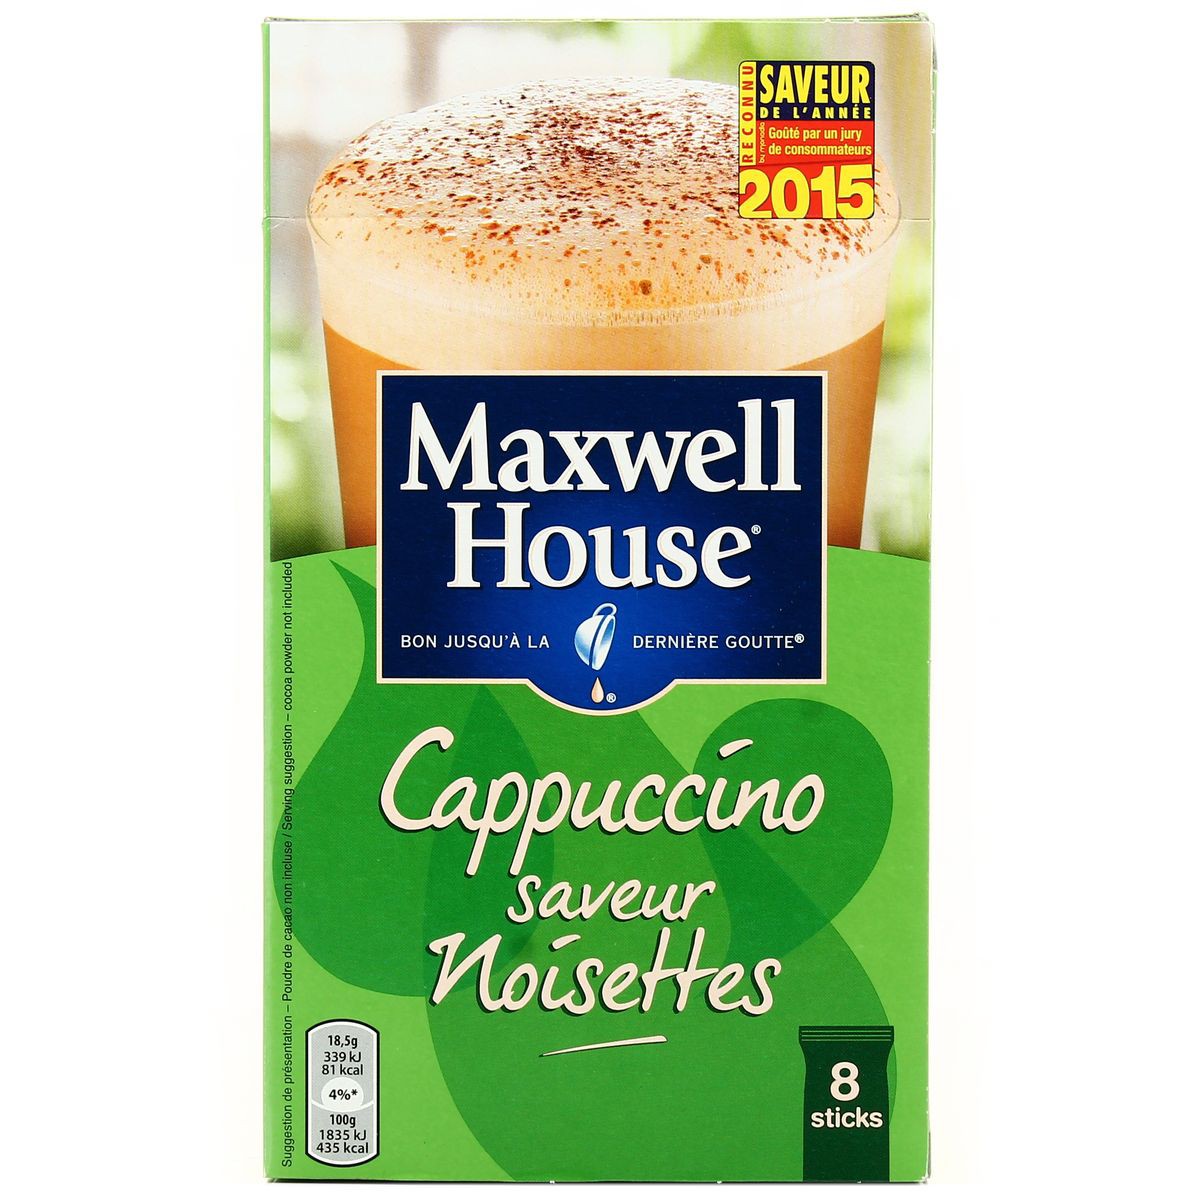 https://drhmarket.com/97793/148g-stick-cappuccino-noisette-maxwelle.jpg